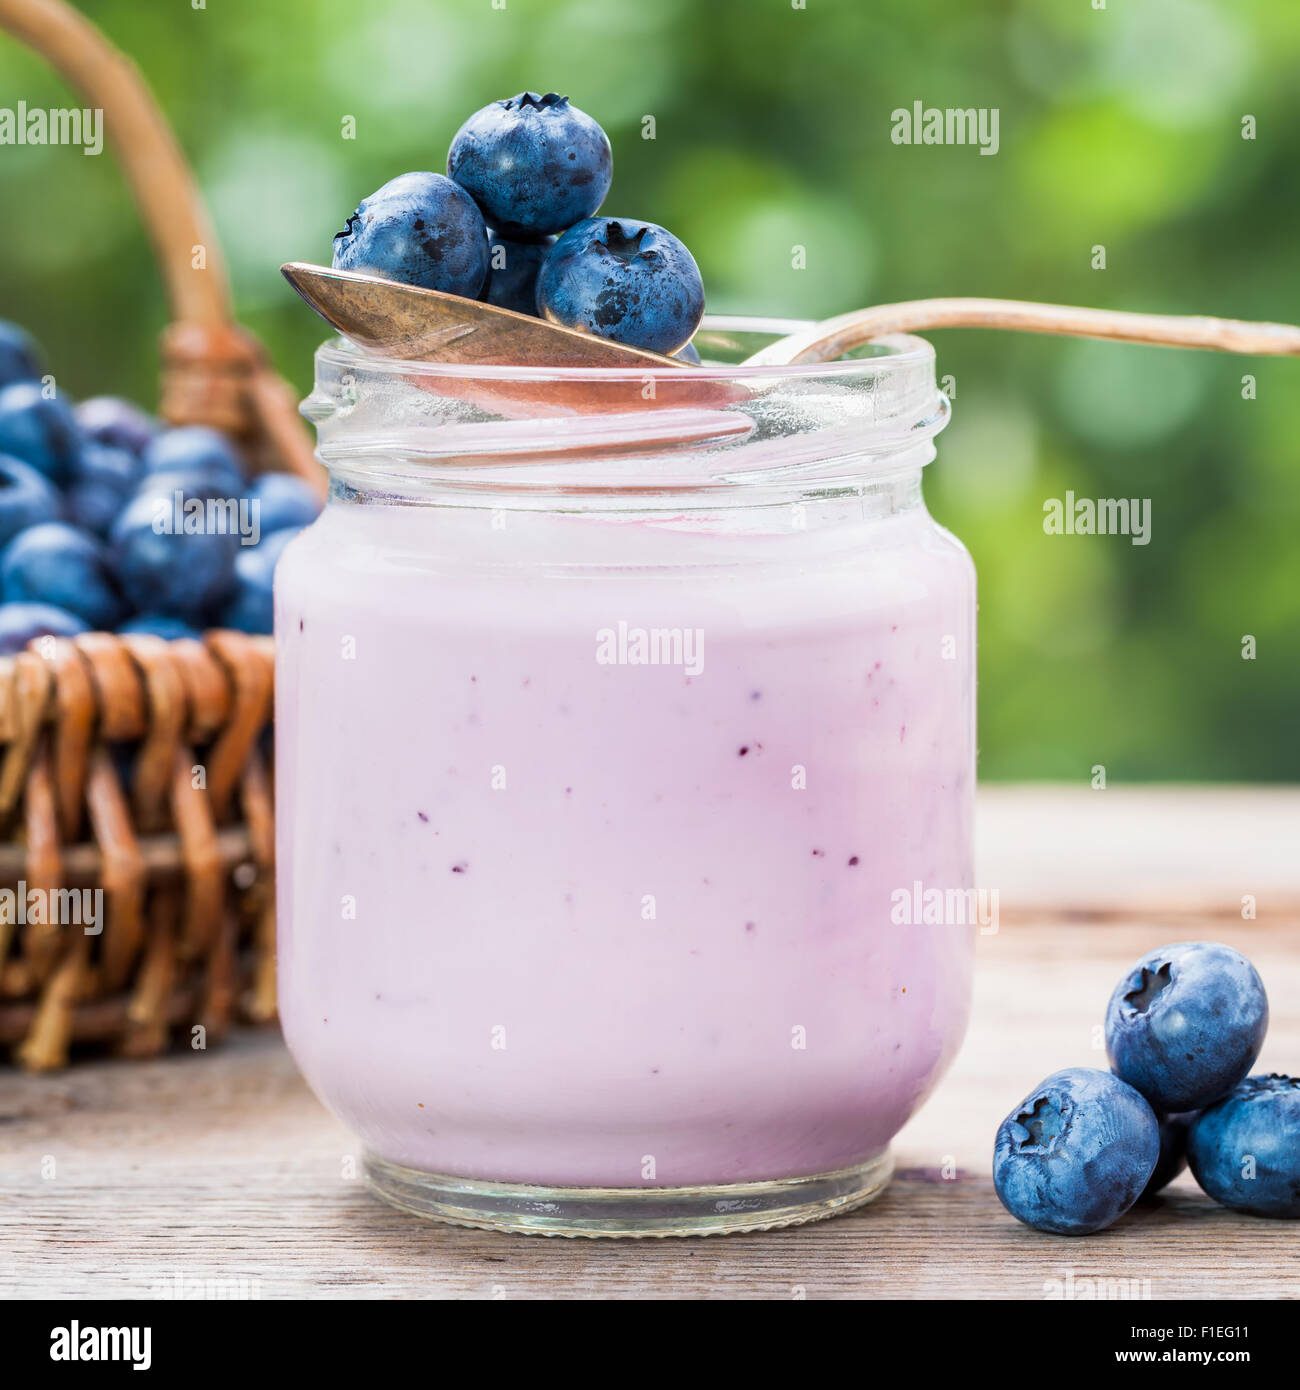 Fresh blueberries yogurt in glass jar and wicker basket with bilberries on background. Stock Photo